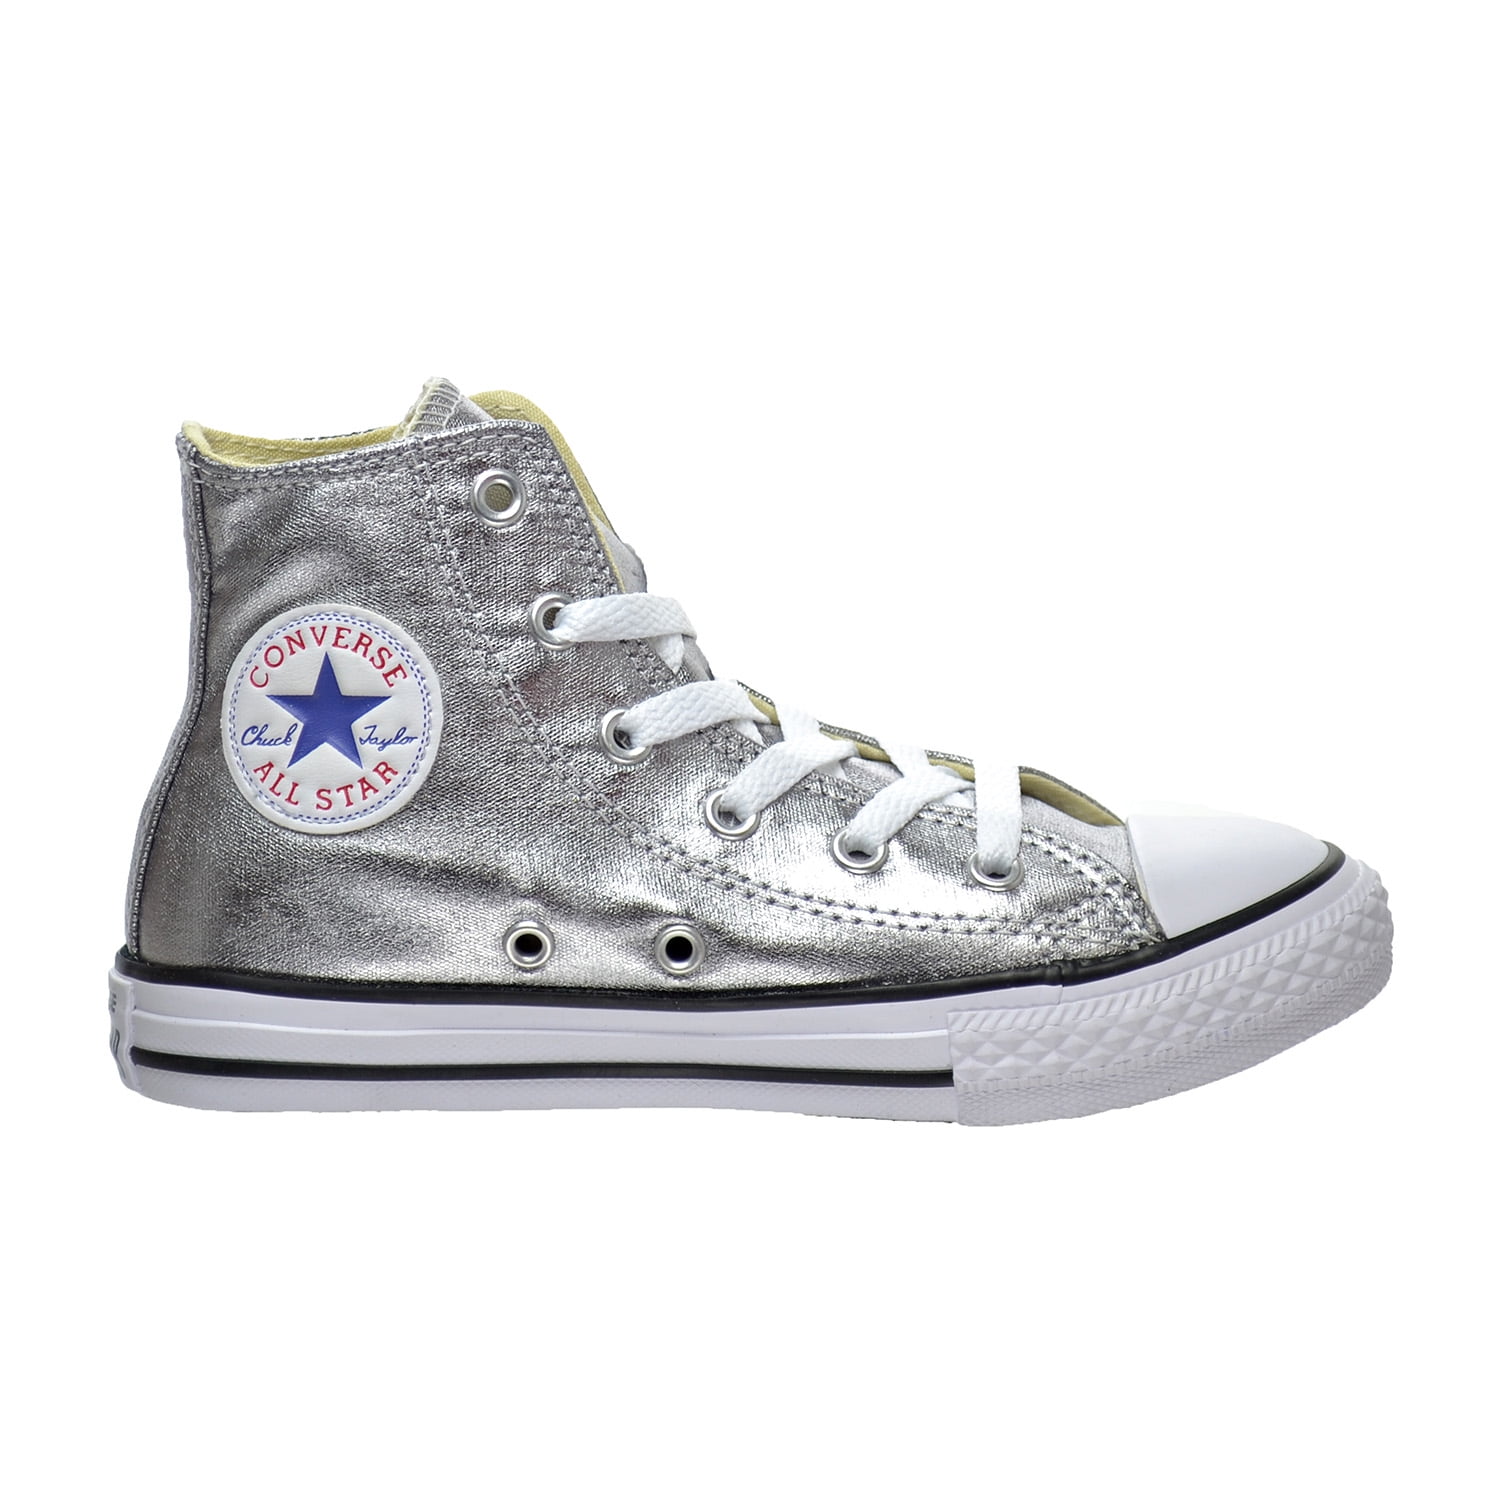 Chuck Taylor All Star High Top Little Kid's Shoes Metallic Gunmetal -